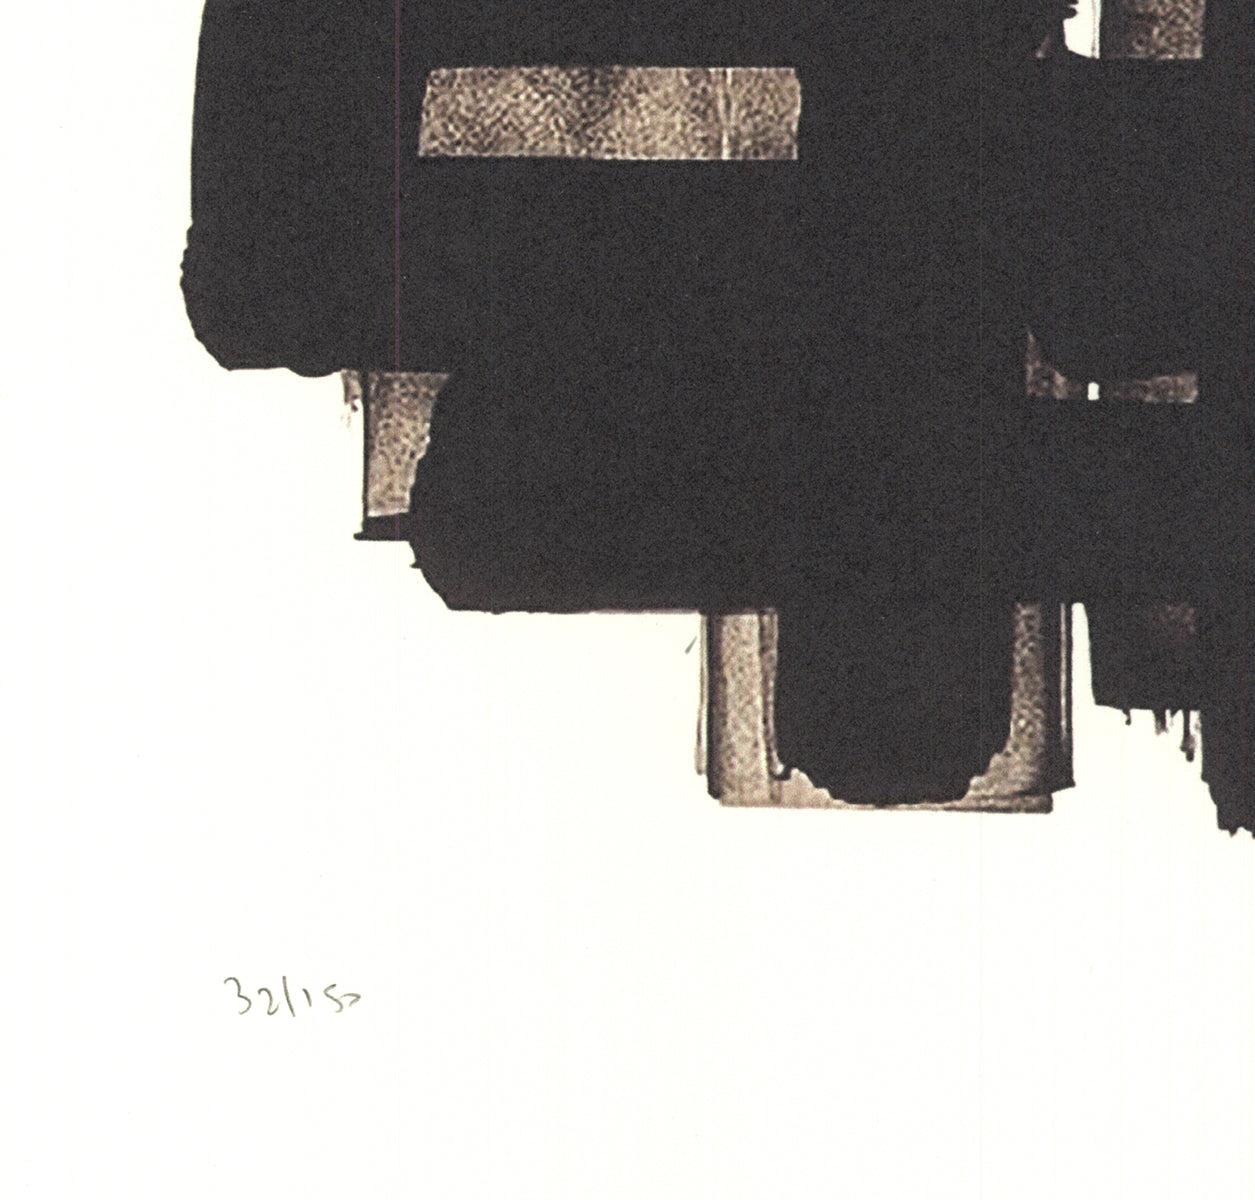 Pierre Soulages 'Ohne Titel (1955)' 2015- Lithograph For Sale 3